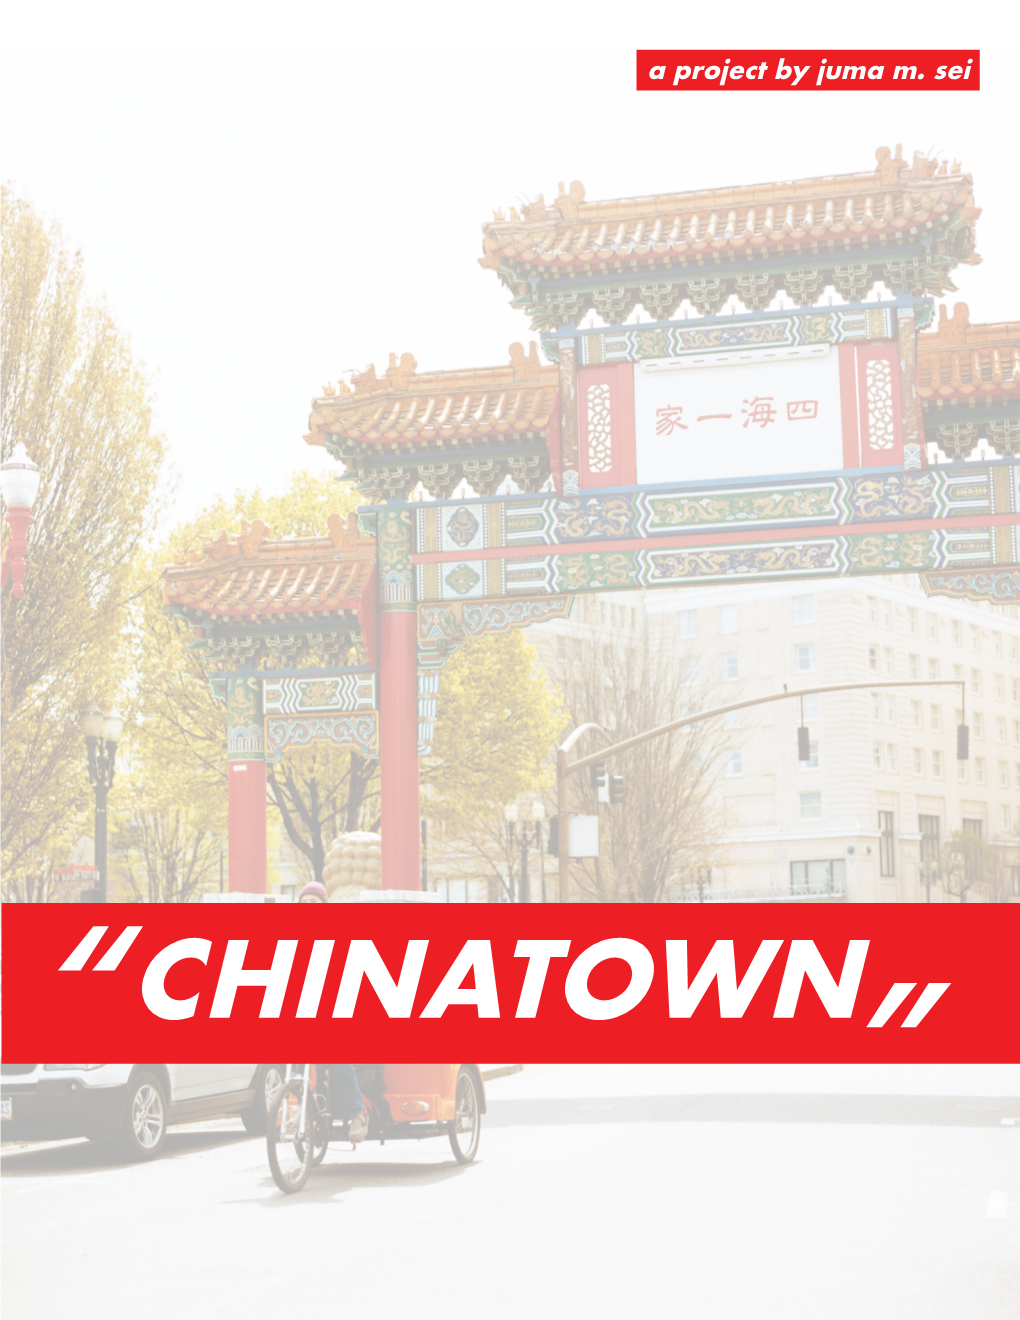 Chinatown Acknowledgments